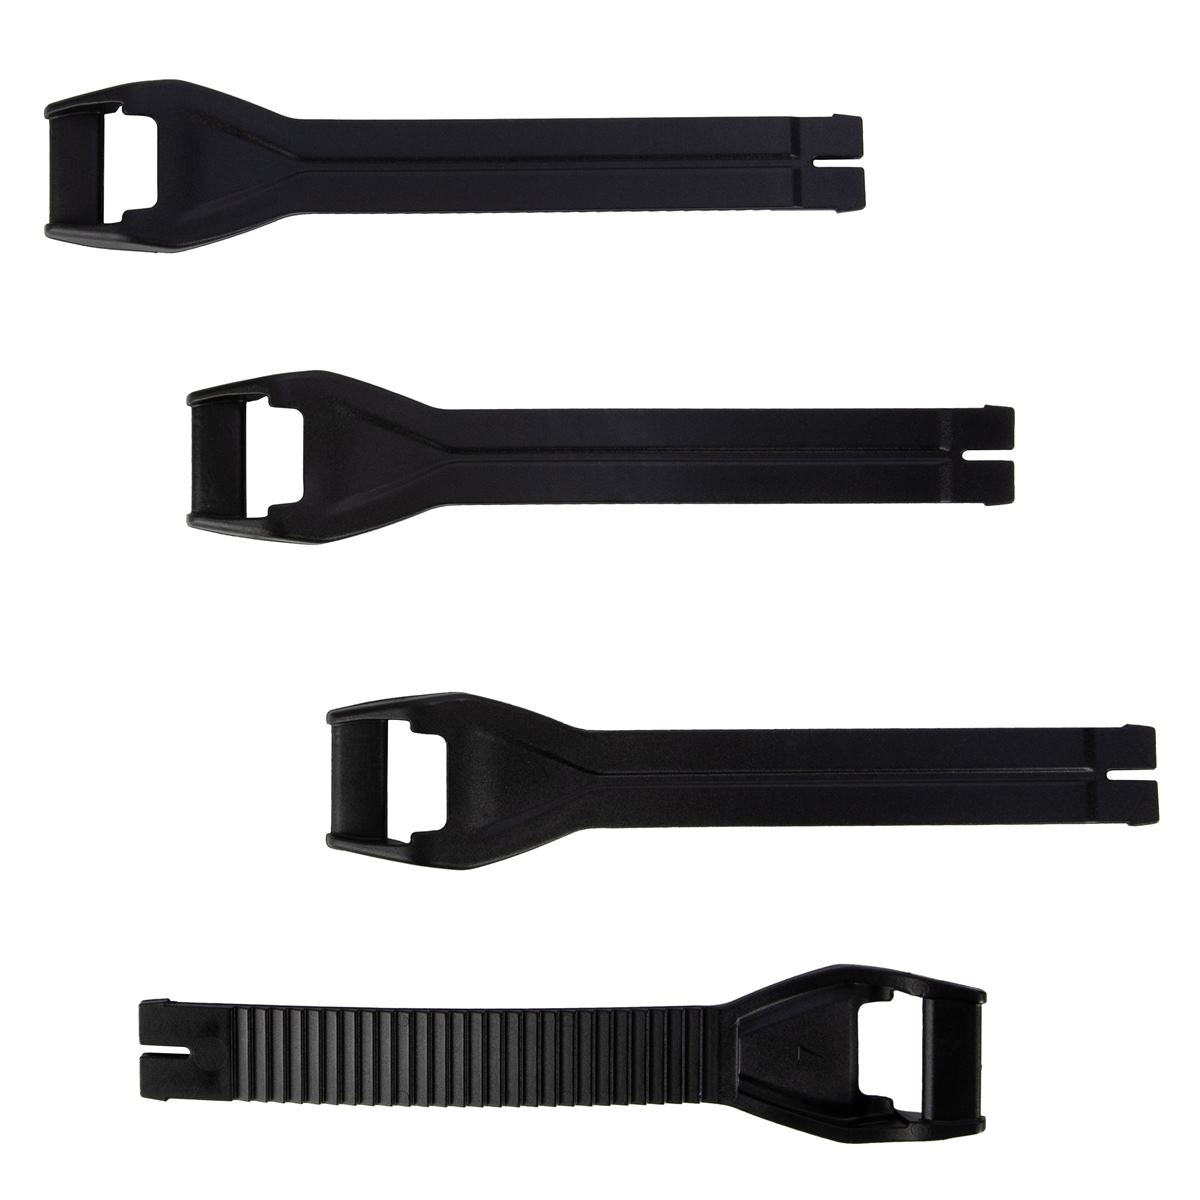 Gaerne Replacement Strap Kit SG 22 Set of 4 - Long, Black